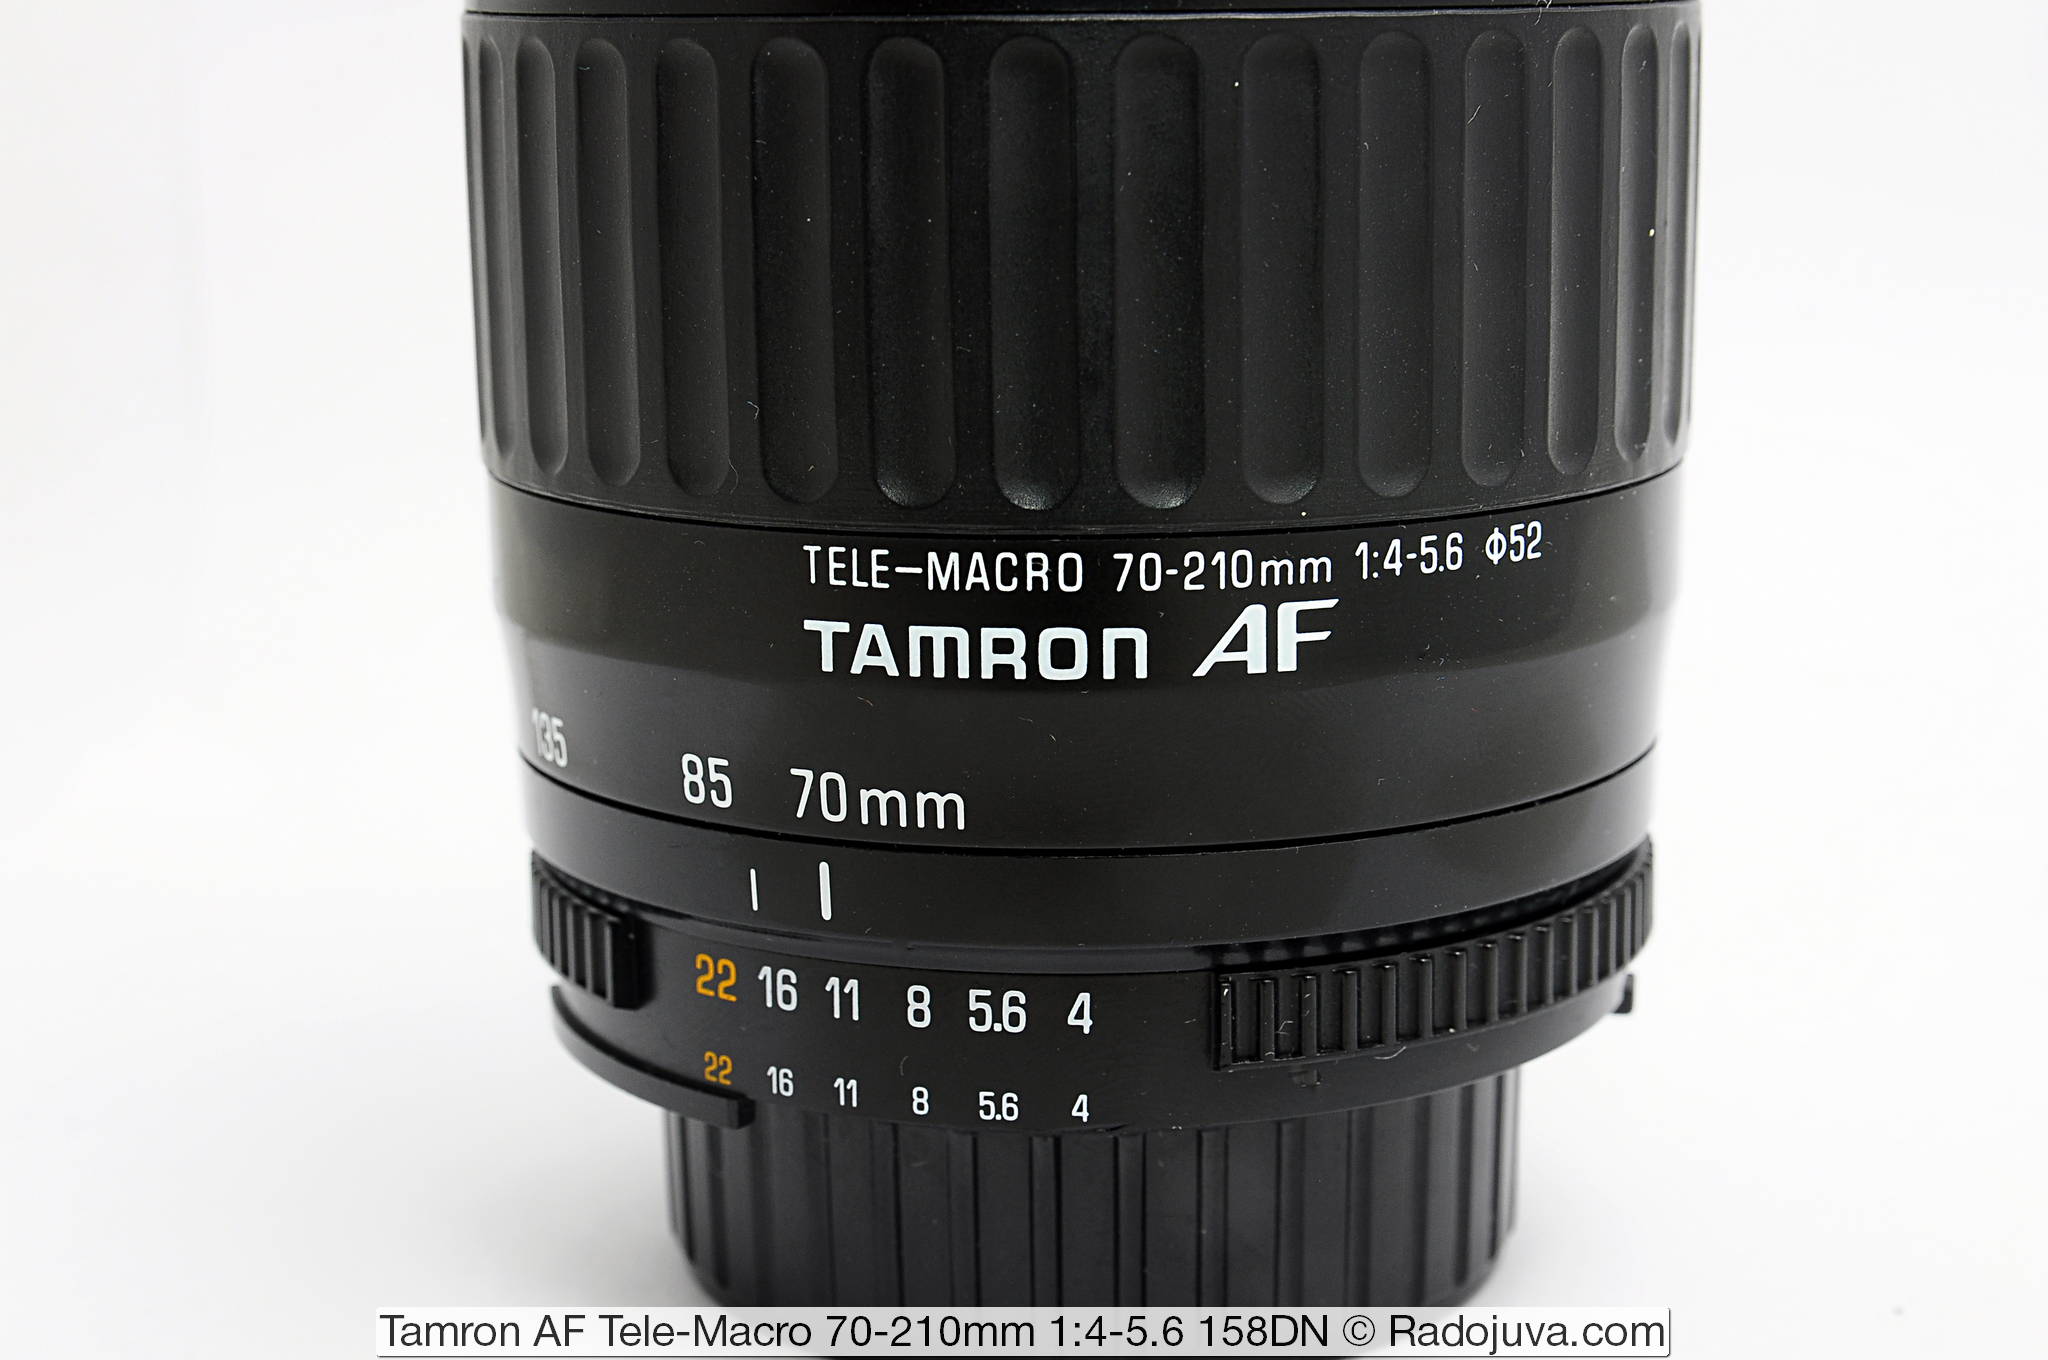 Tamron AF Tele-Macro 70-210 mm 1:4-5.6 158DN